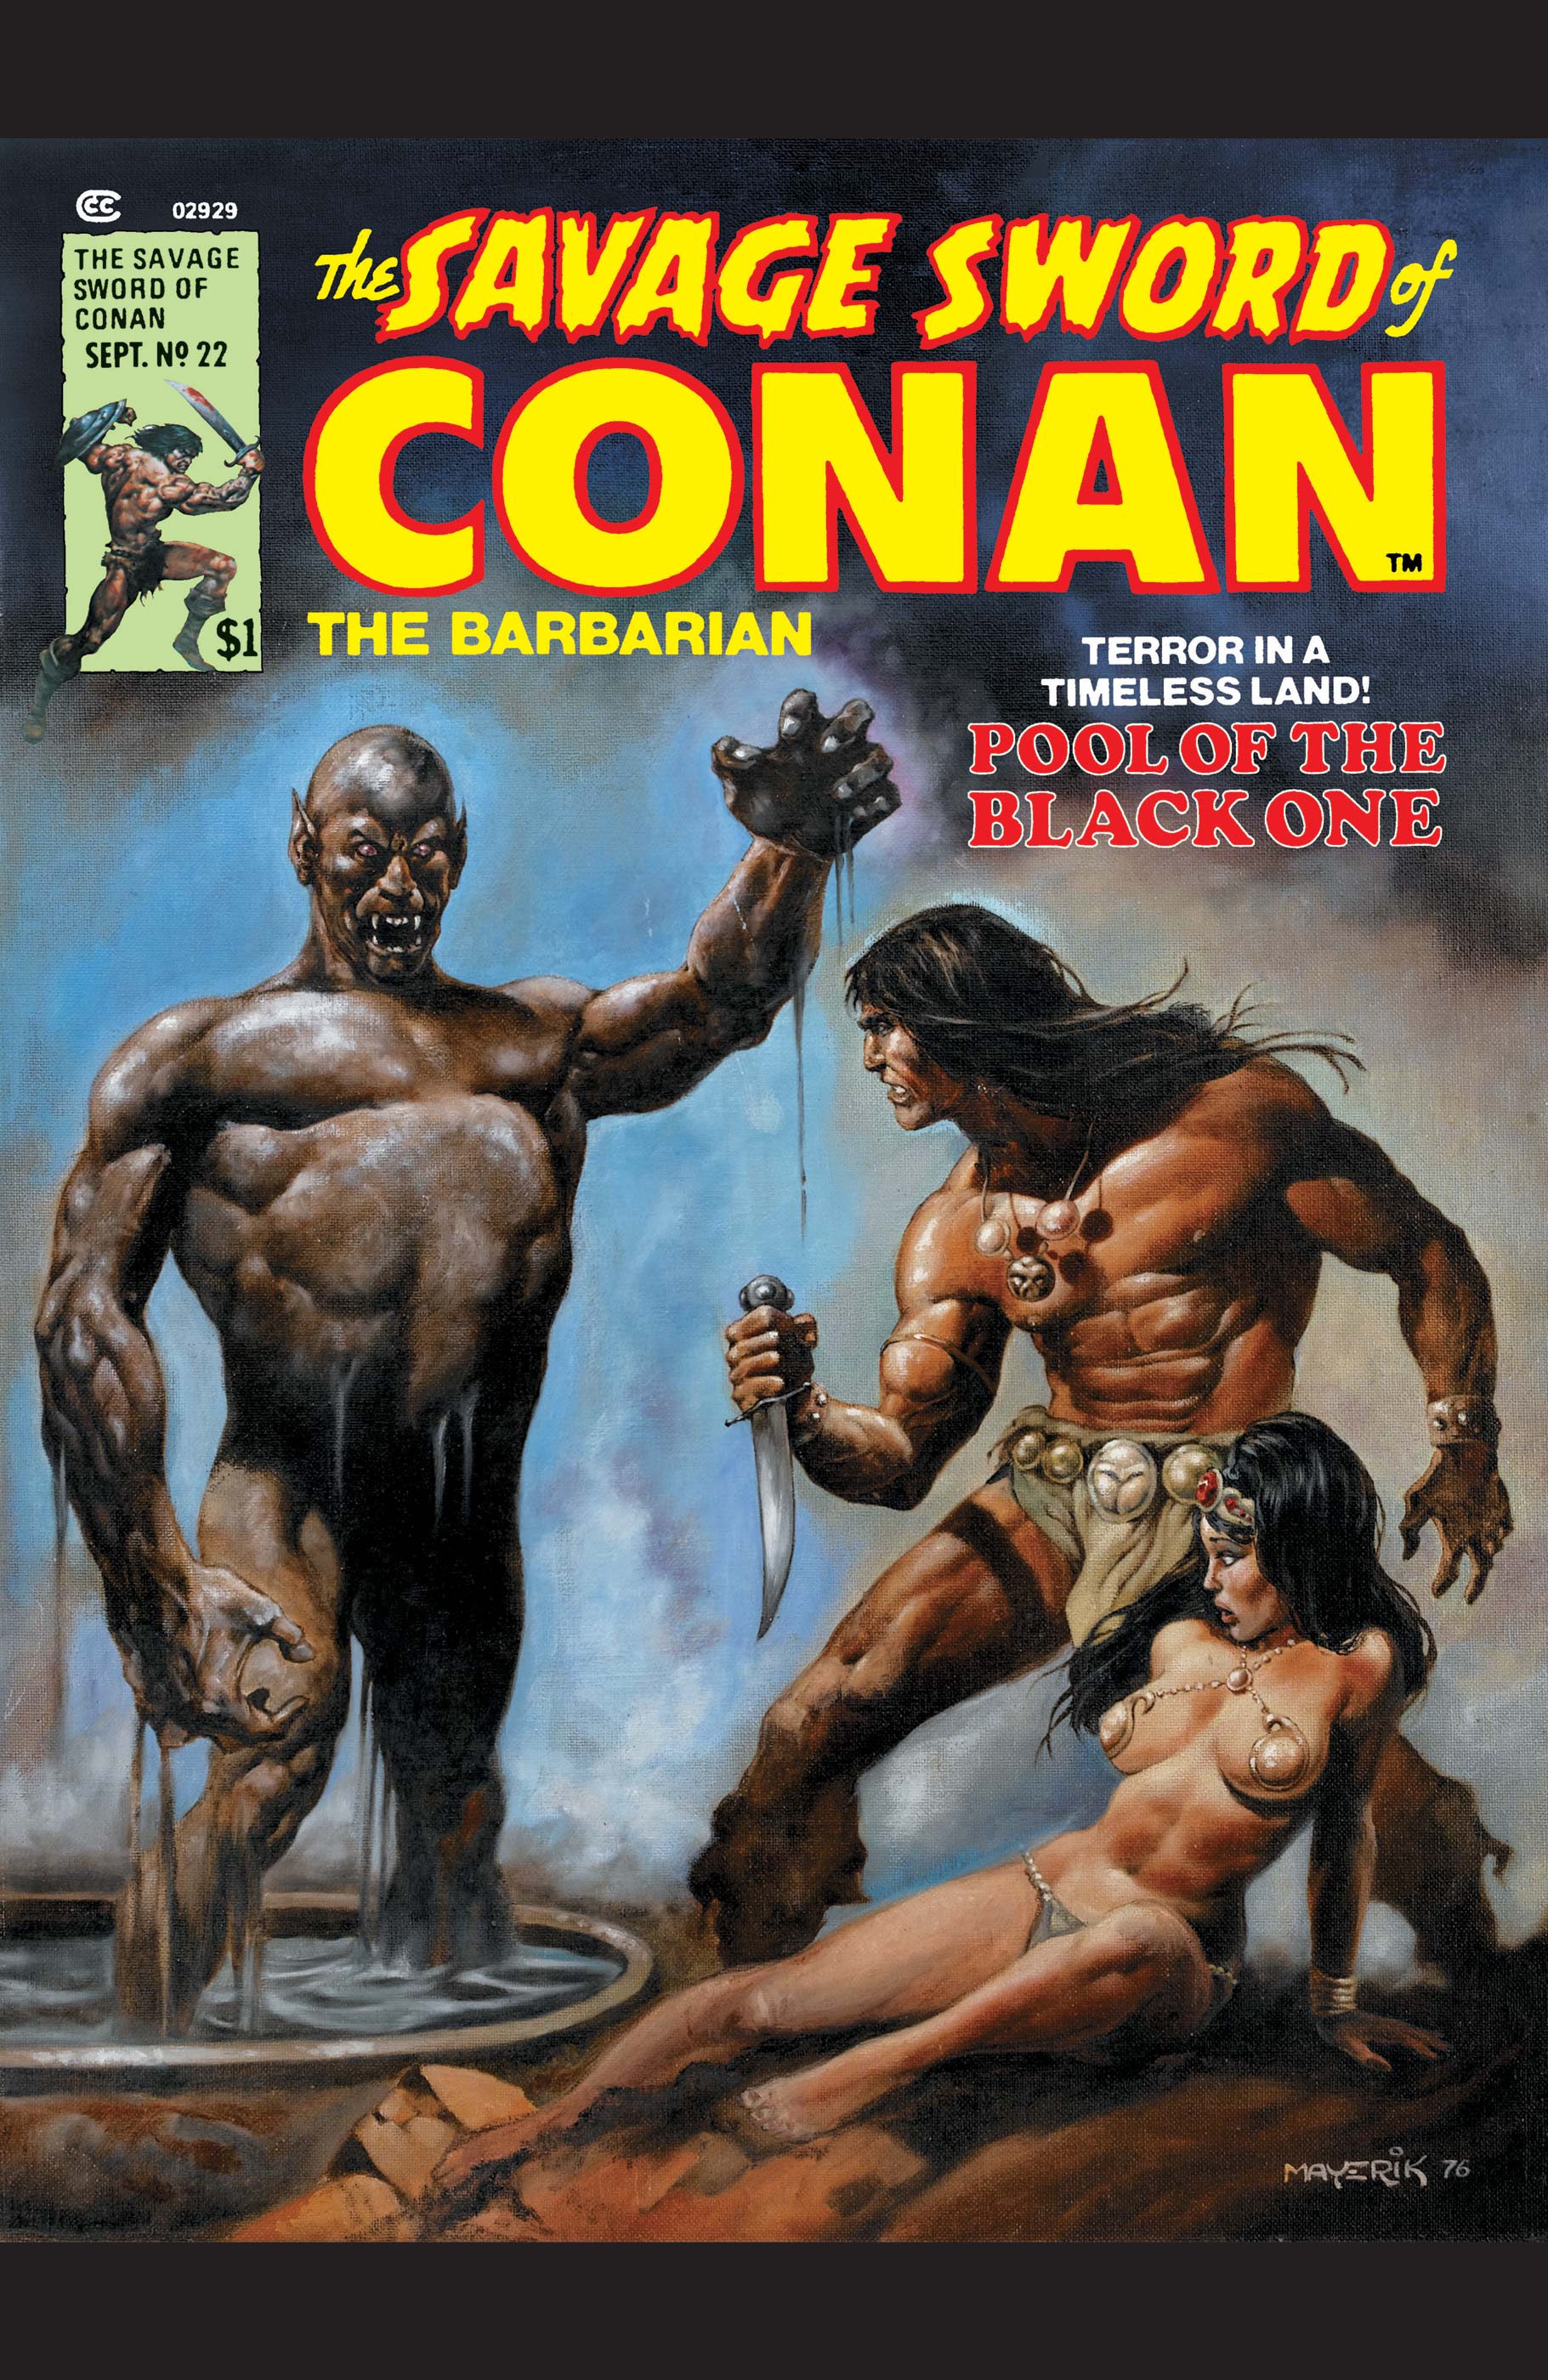 The Savage Sword of Conan (1974) #22